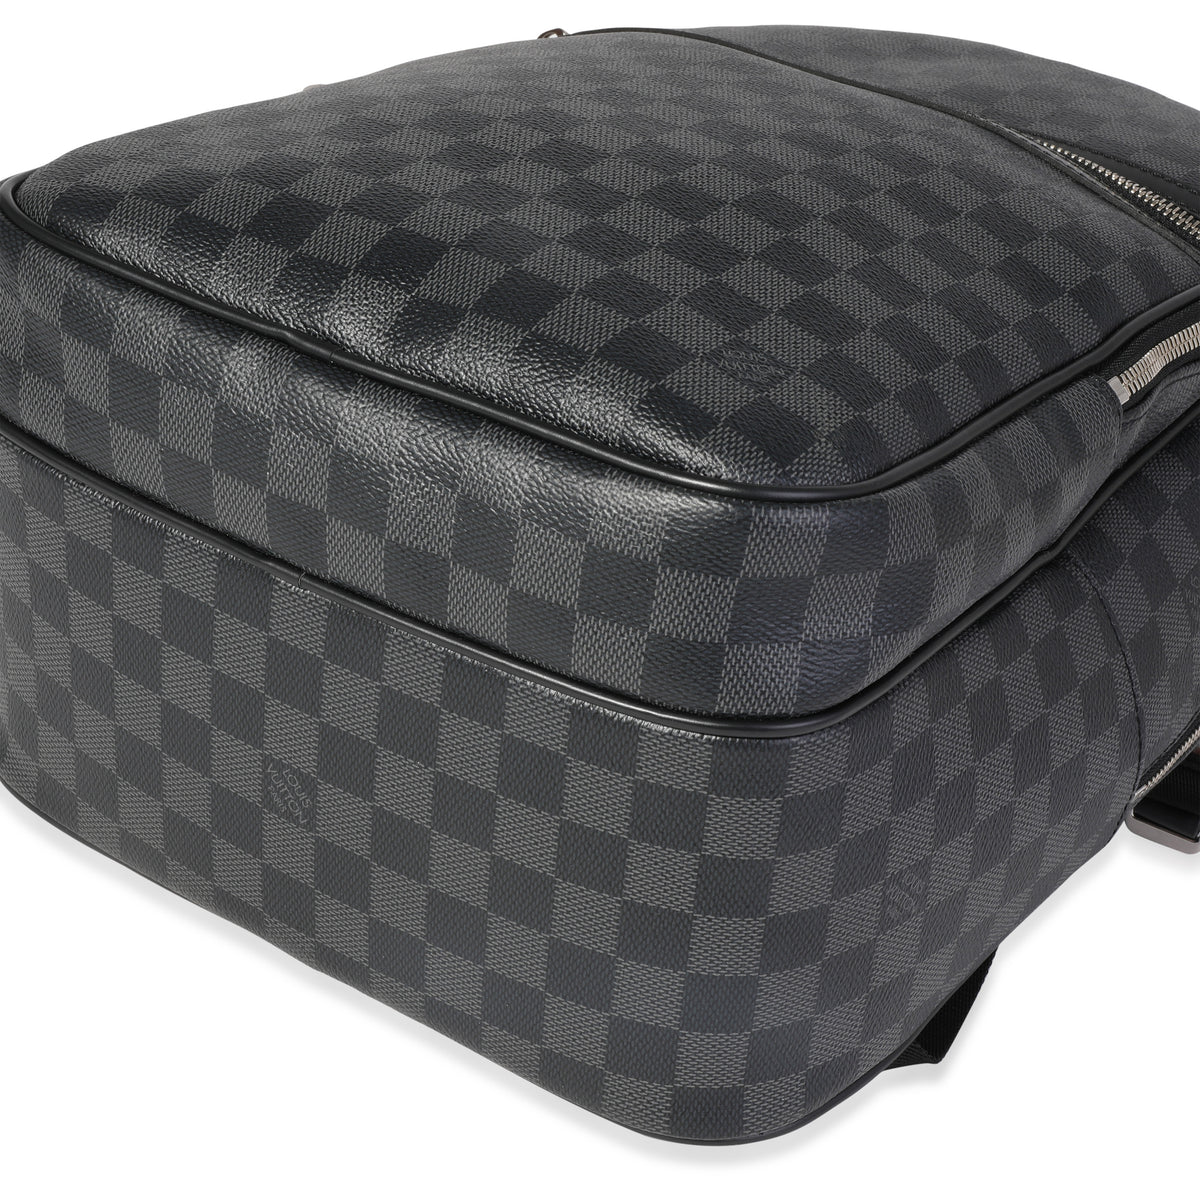 Louis Vuitton Michael Backpack 375625